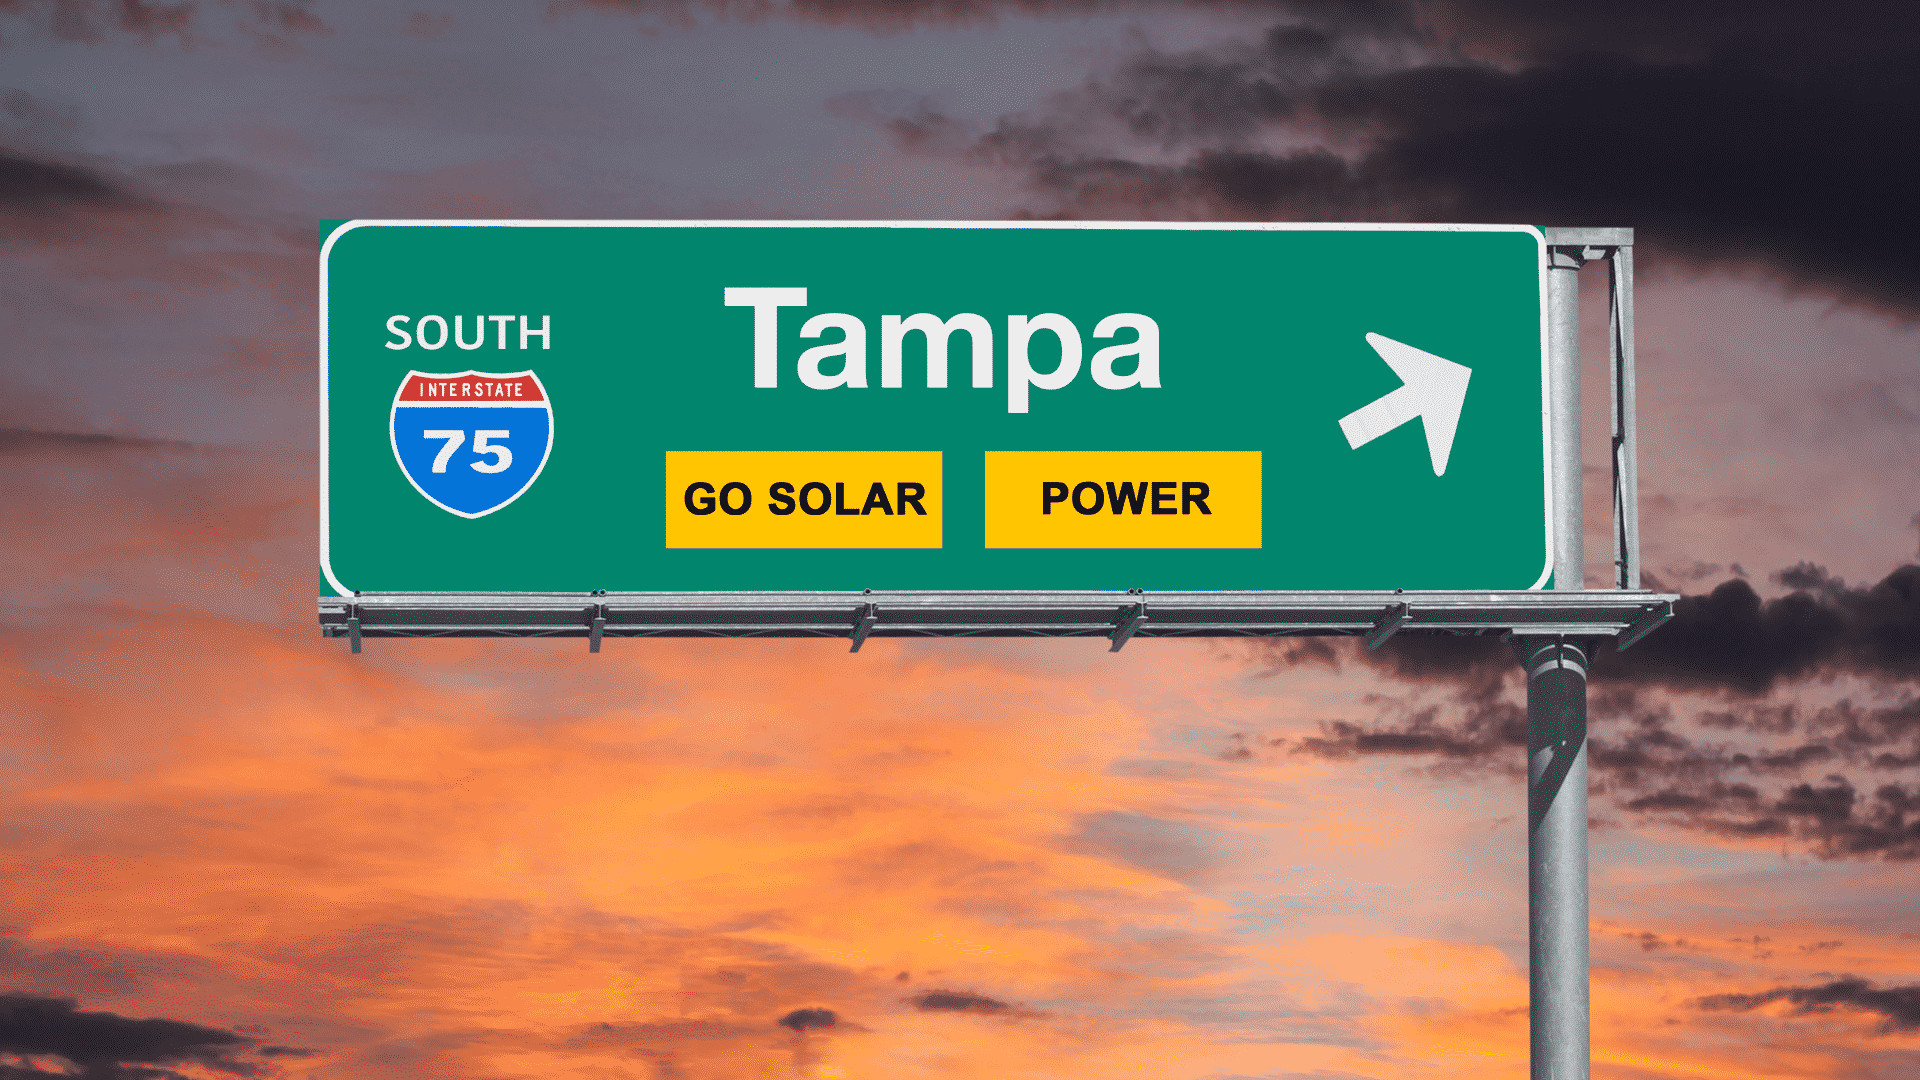 Tampa Florida Go Solar Power